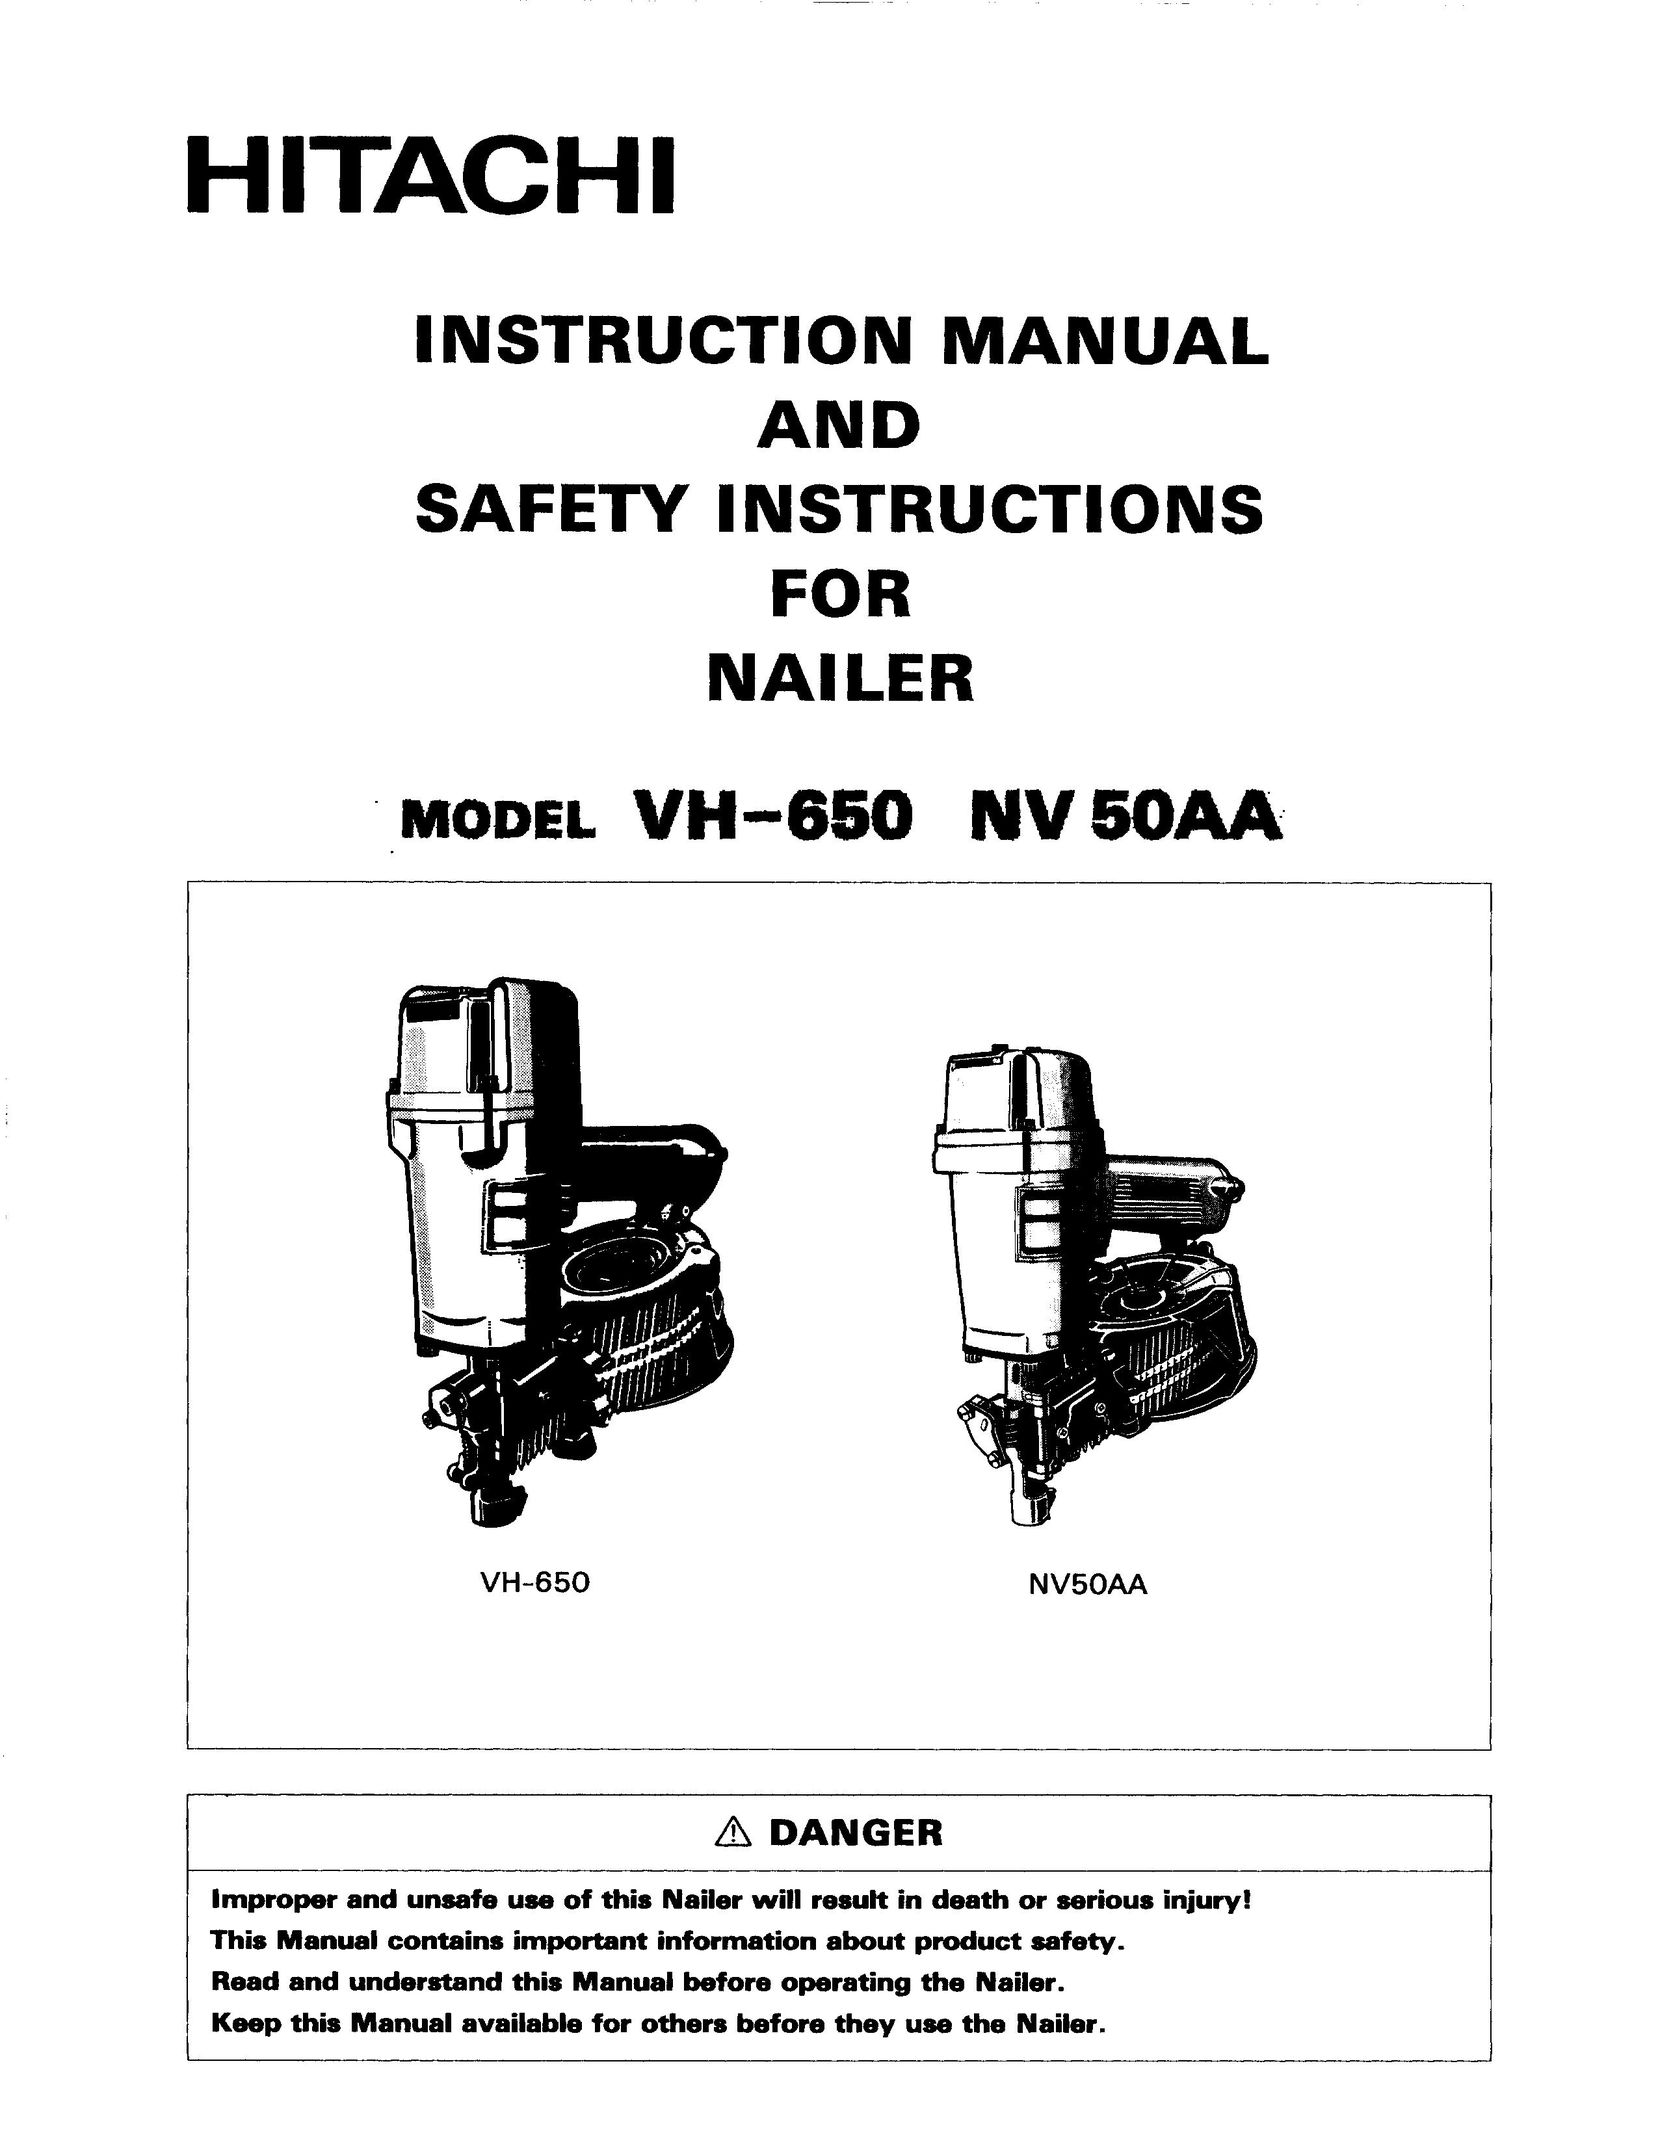 Hitachi NV50AA Nail Gun User Manual